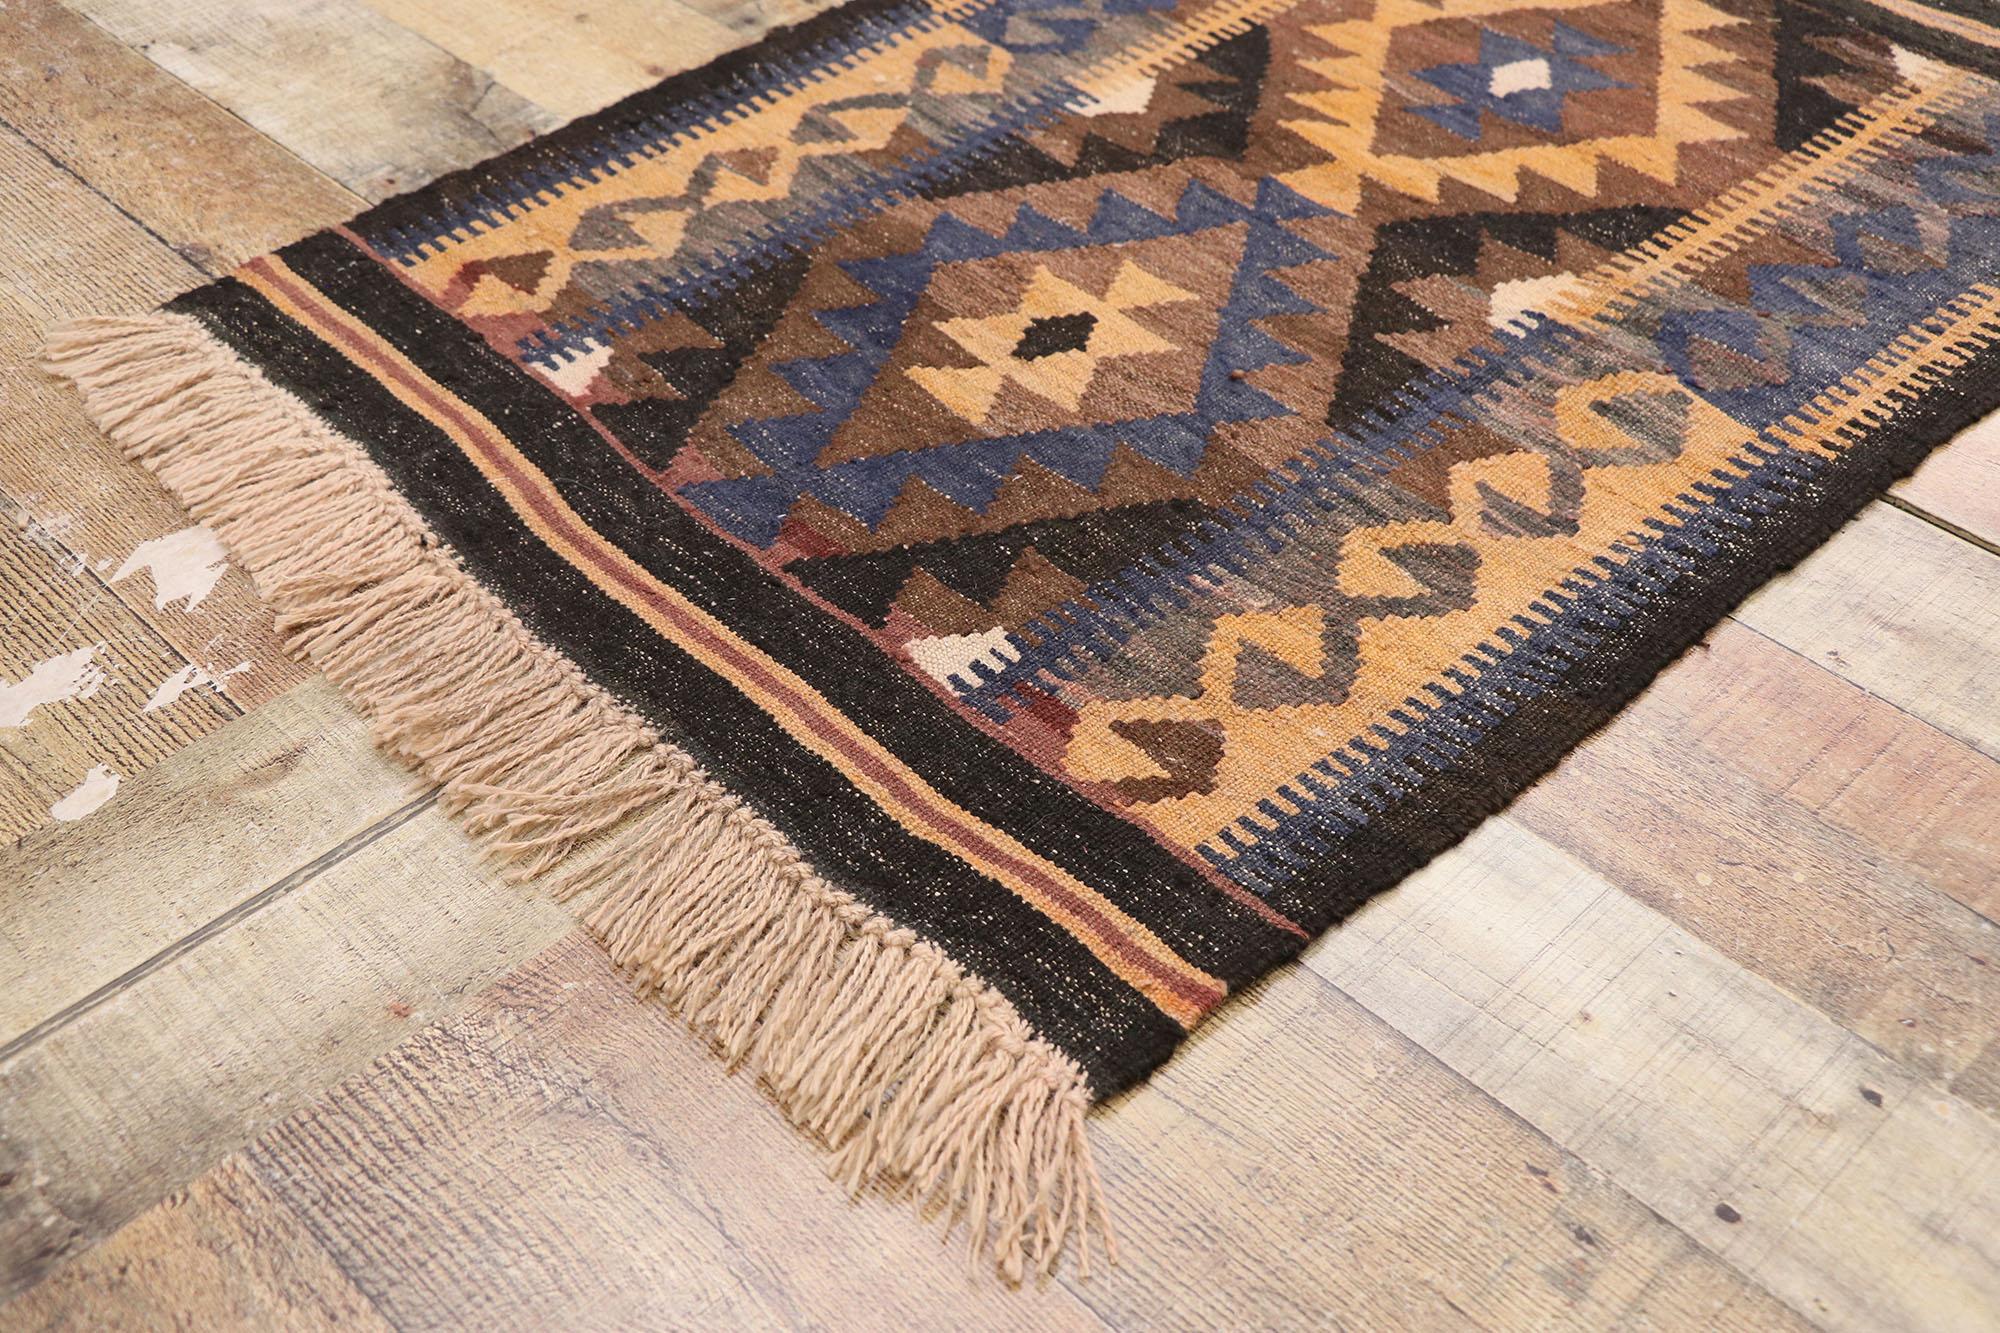 Wool Vintage Afghani Maimana Kilim Rug with Modern Tribal Style